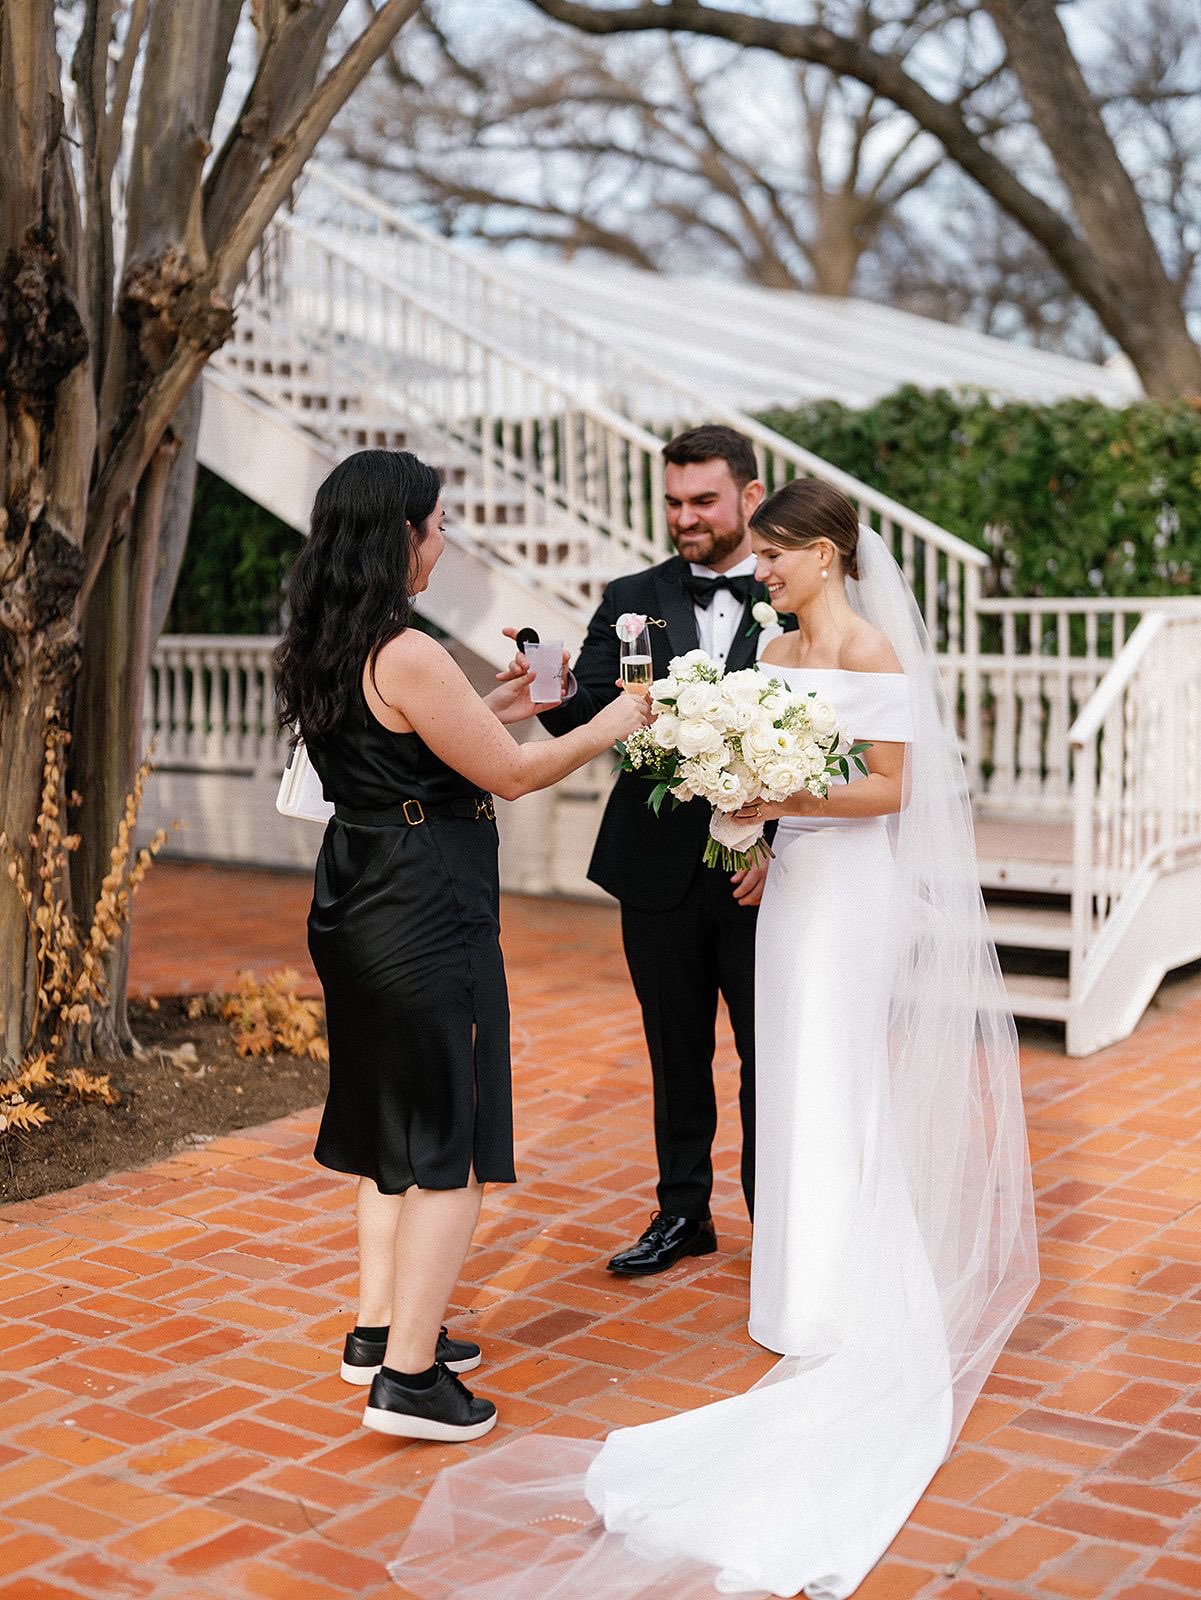 Austin wedding planner handing bride and groom celebratory drinks
